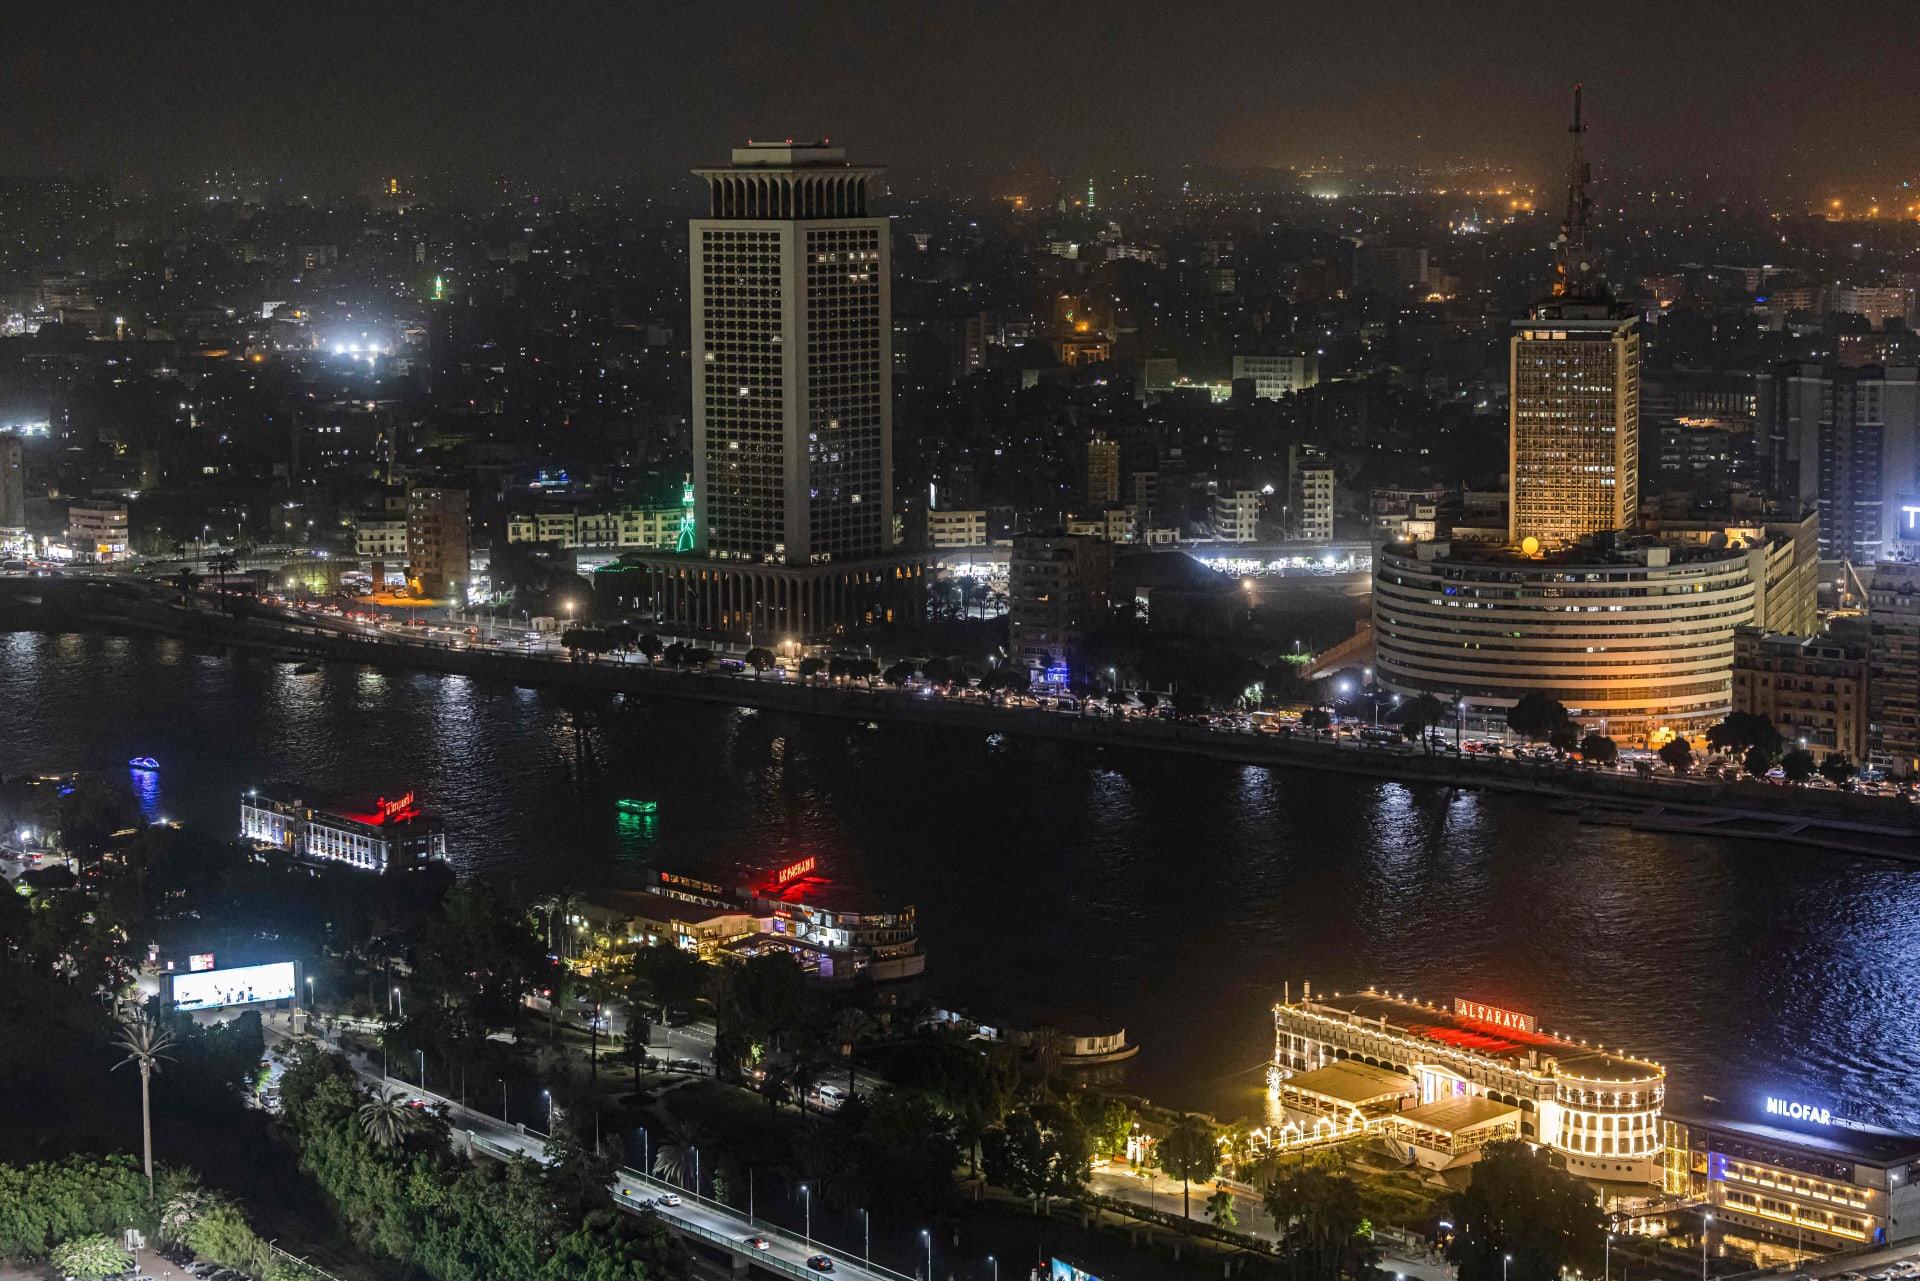 Kairo von oben